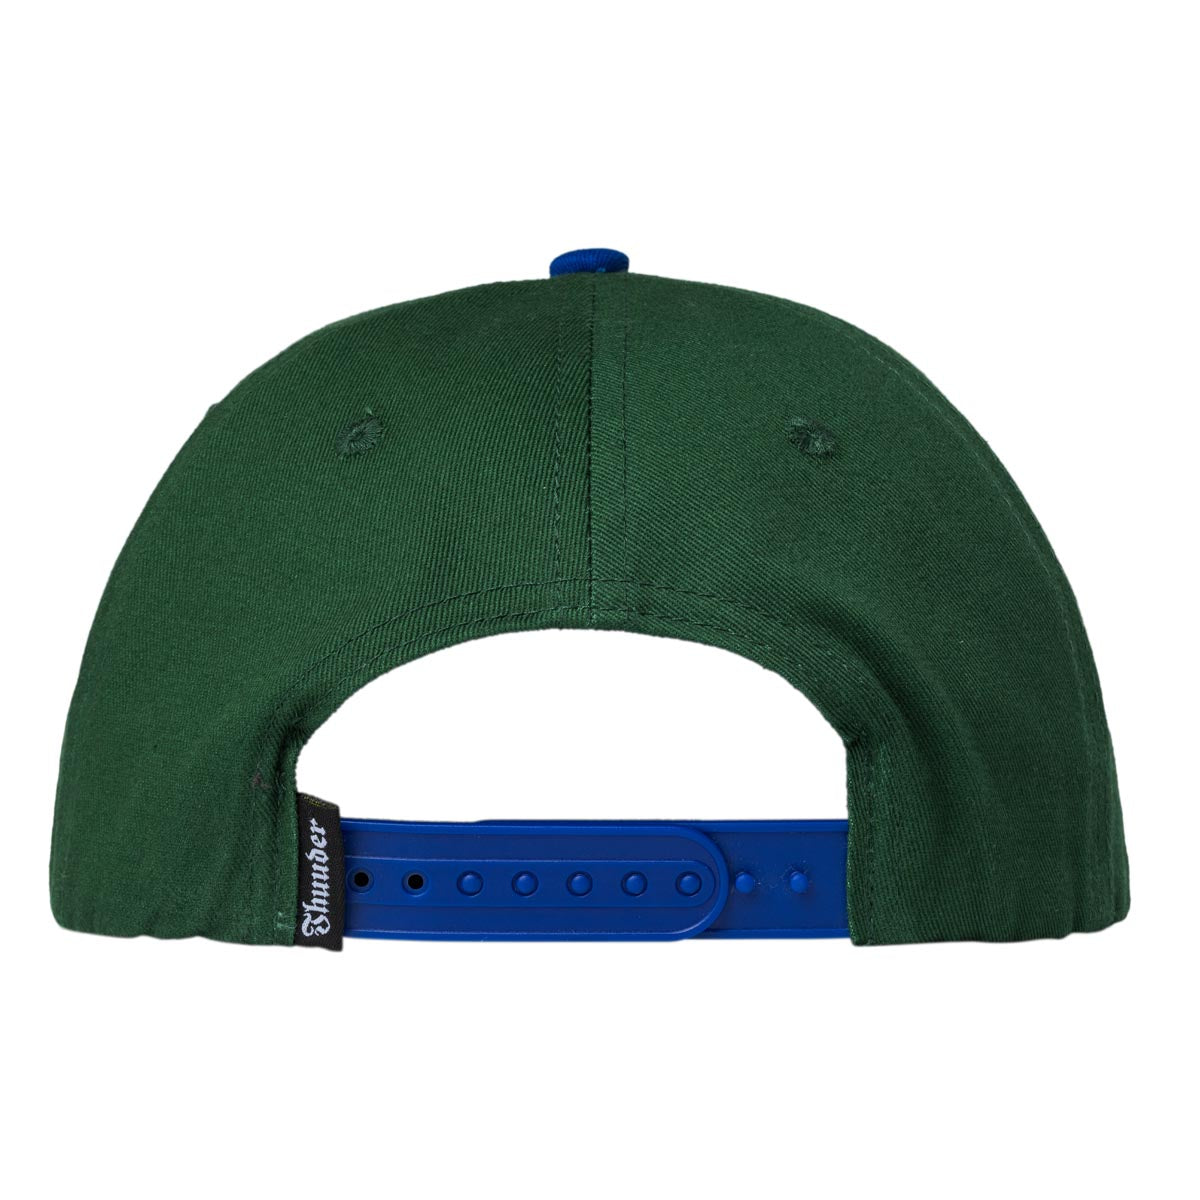 Thunder Boxed Bolt Hat - Dark Green/Blue image 2